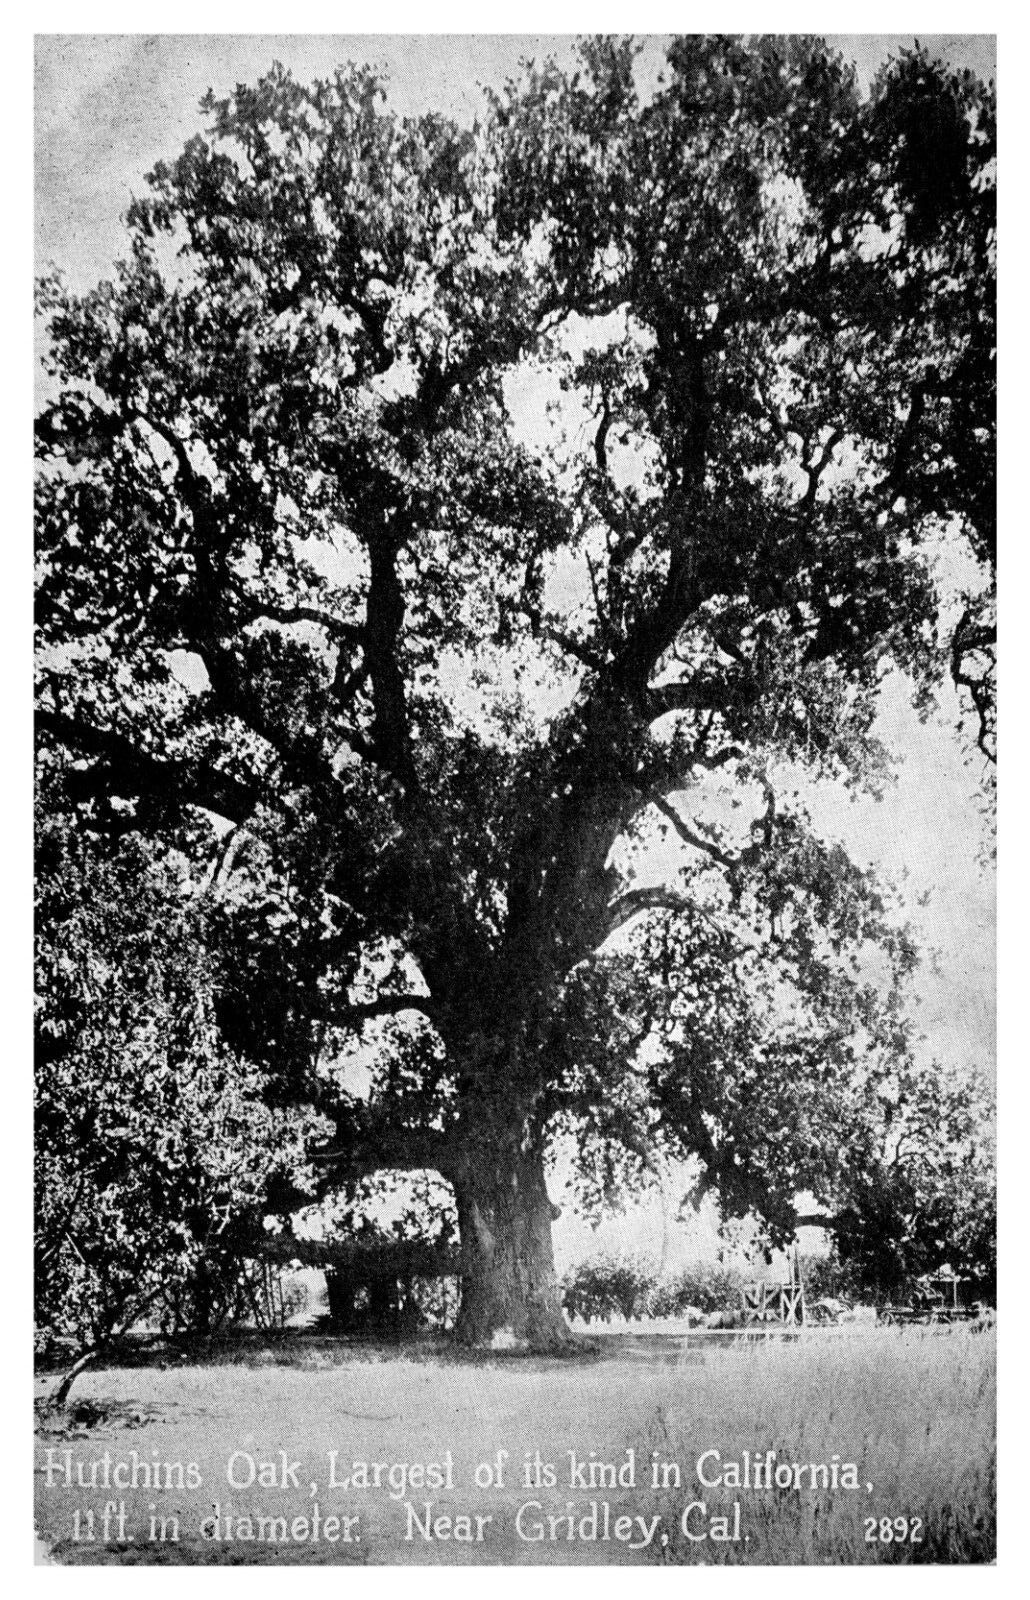 Roadside Attraction Gridley California Largest Hutchins Oak 11 Foot Diameter-A47